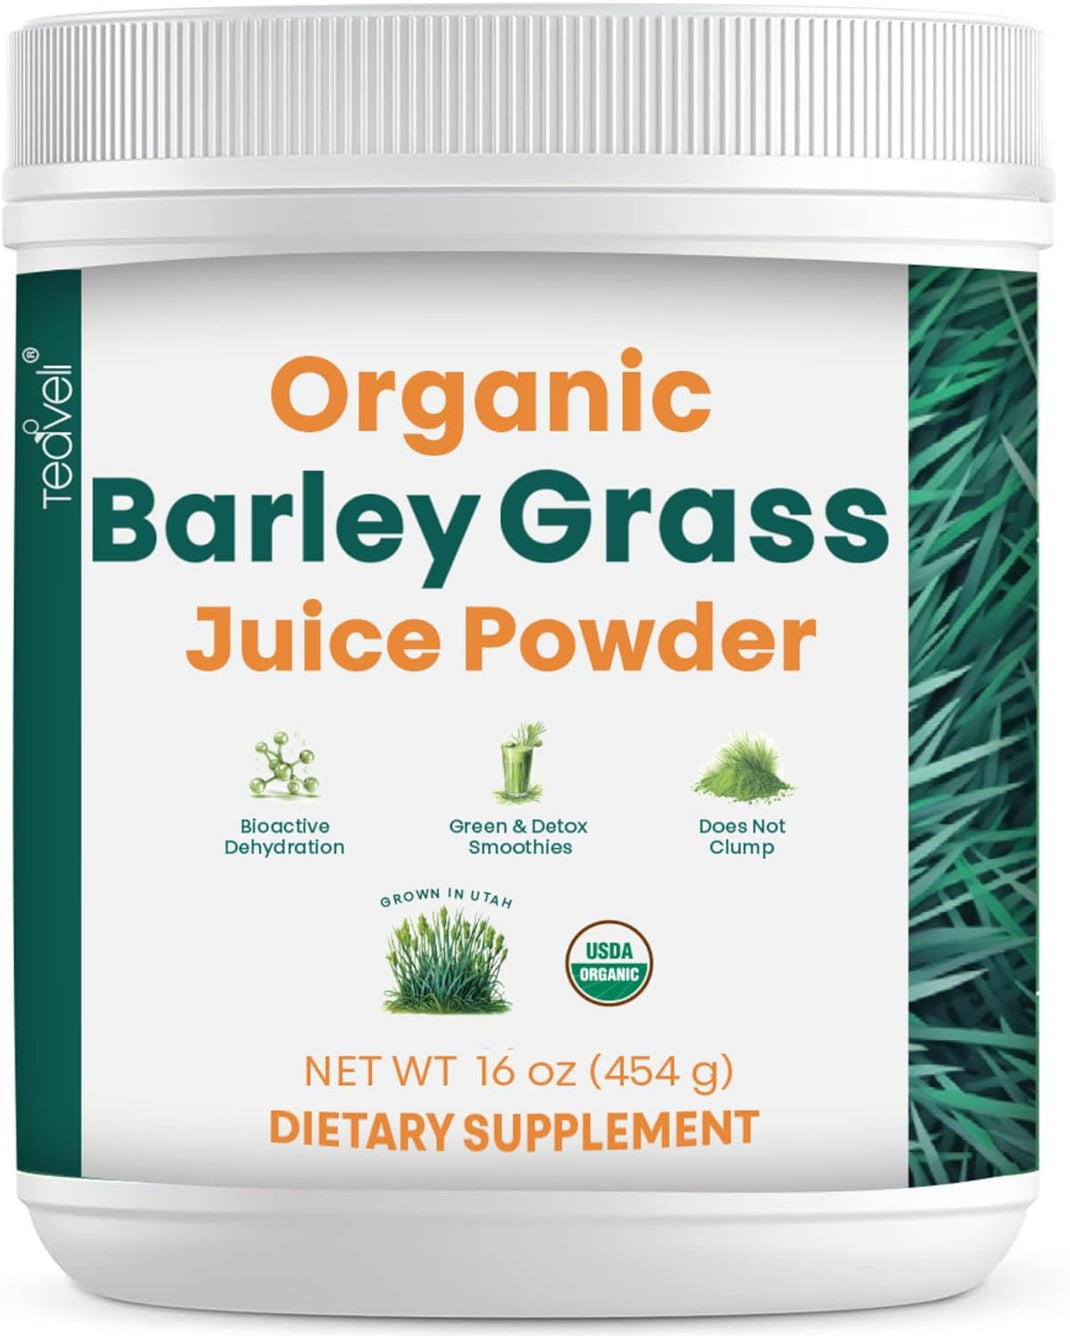 USDA Organic Barley Grass Juice Powder